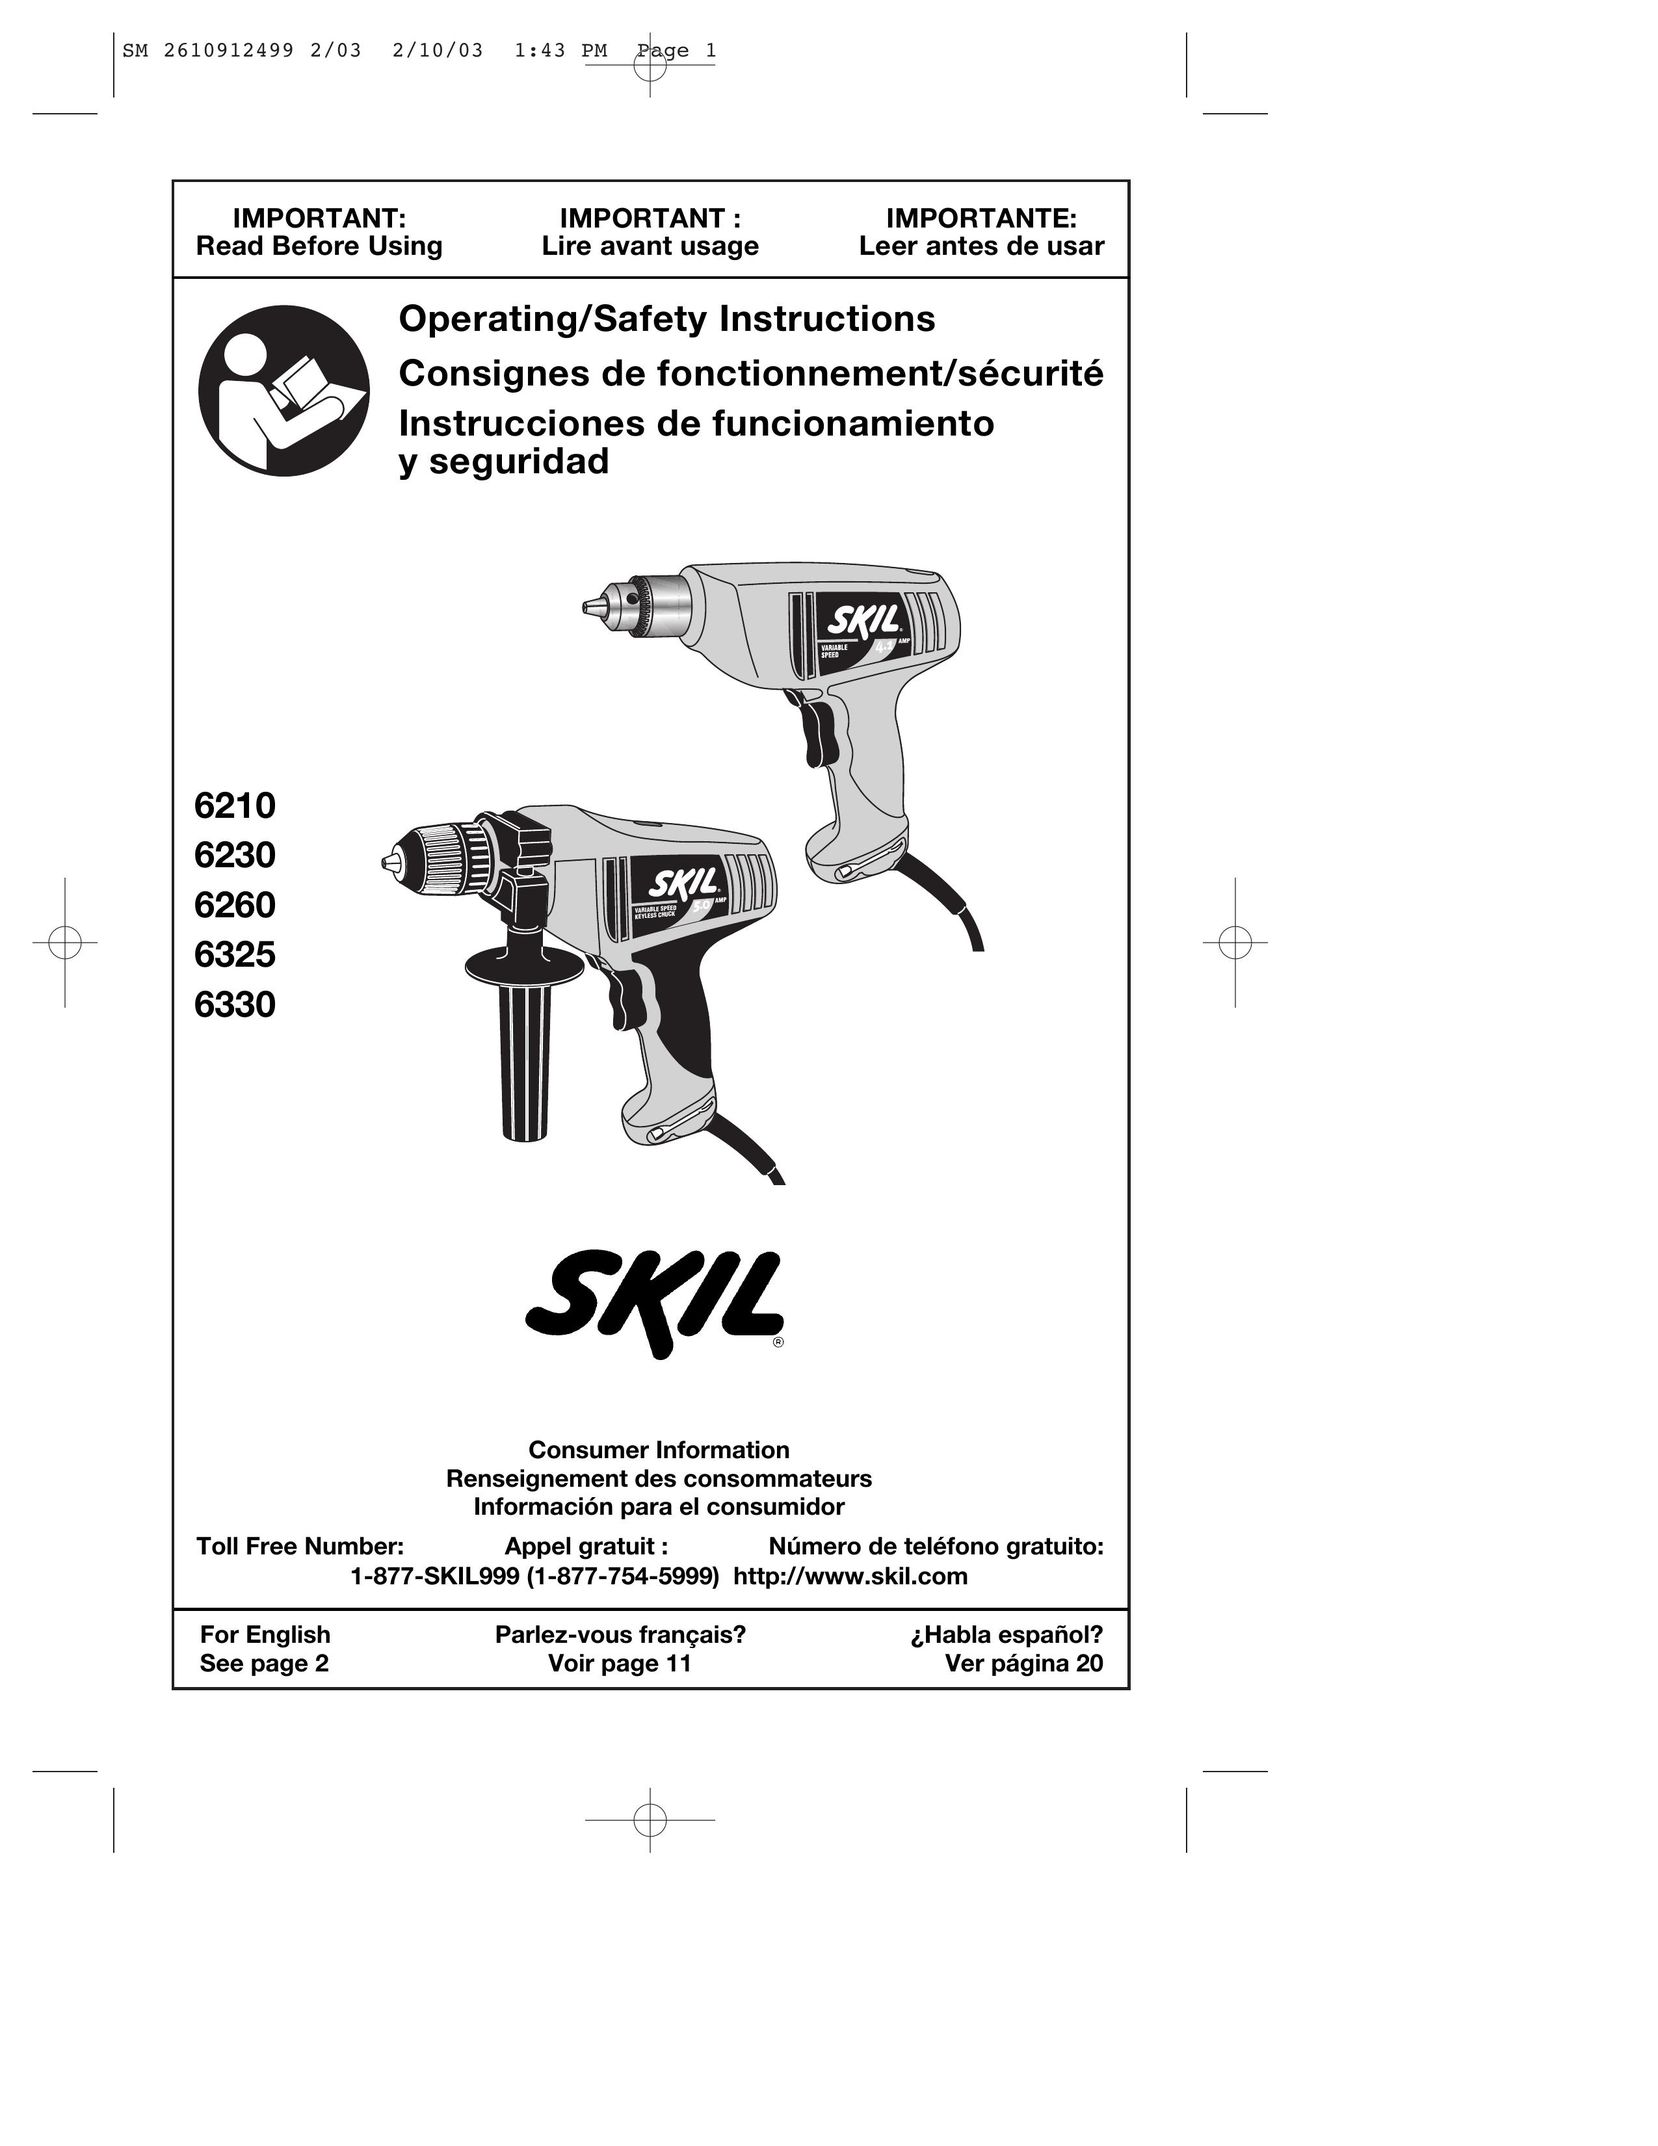 Skil 6325 Drill User Manual